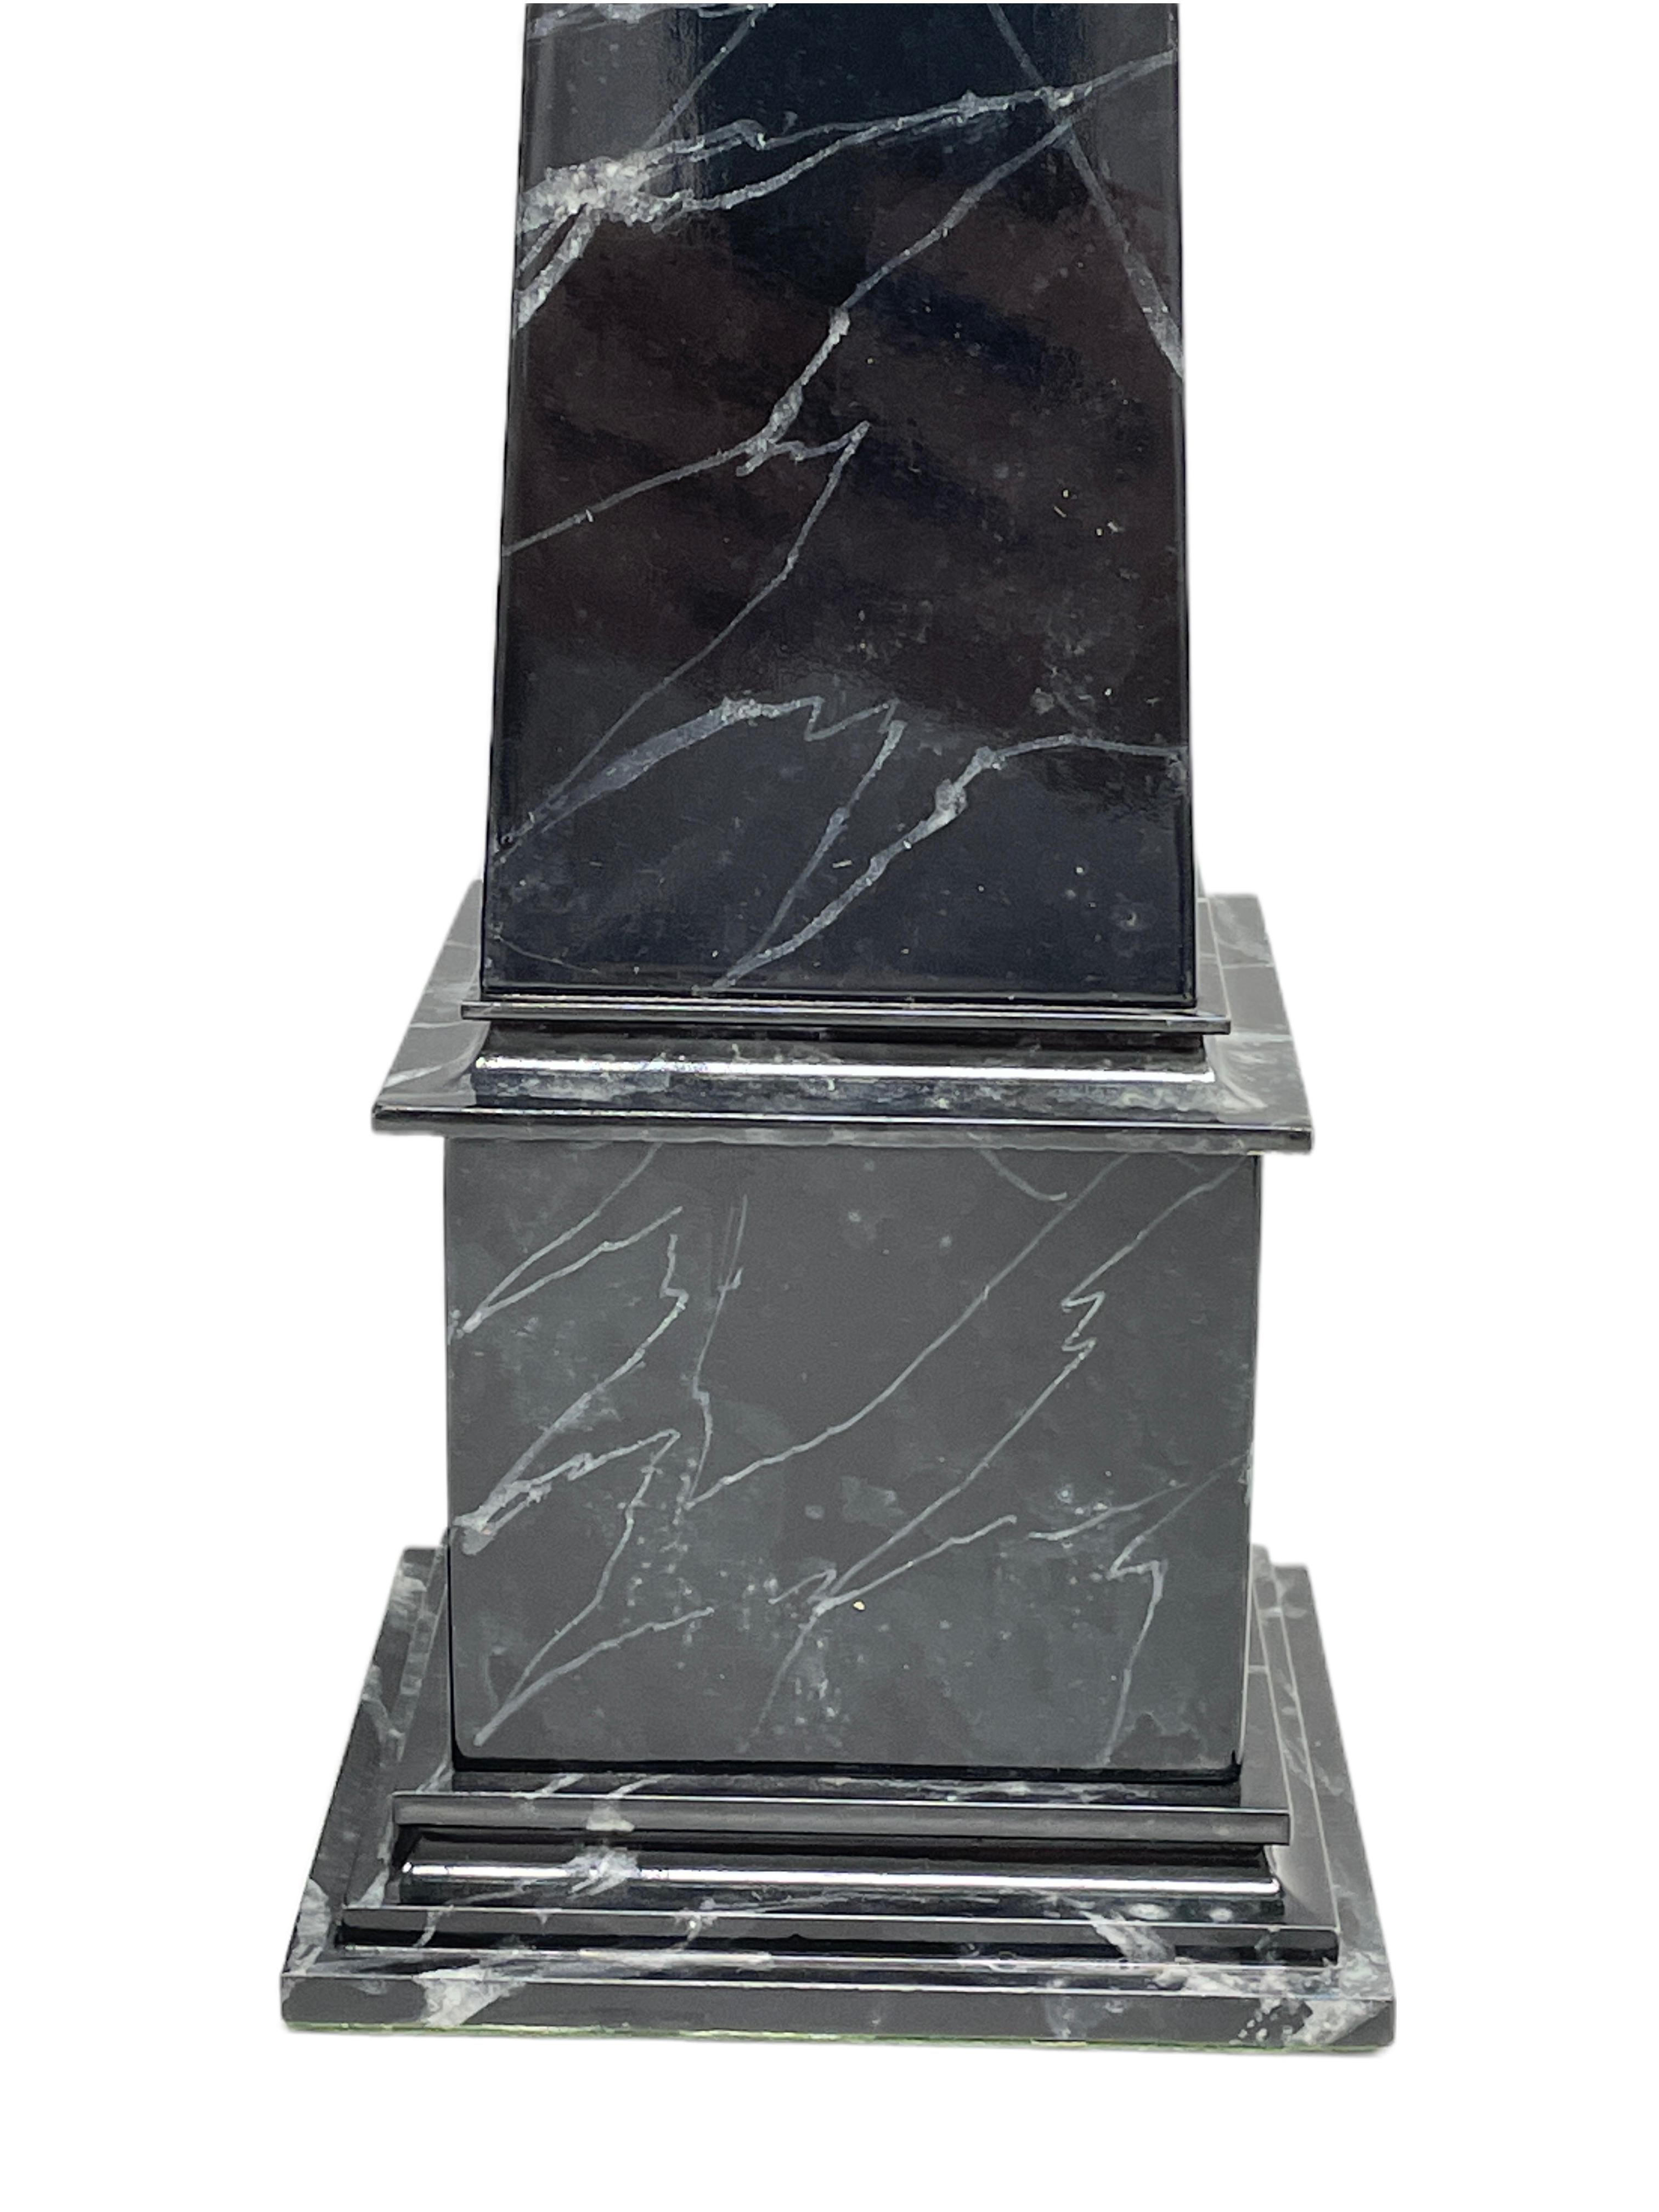 Obelisk Sculpture Marbled Wood, Black and White, Antique Austria 1900s For Sale 1